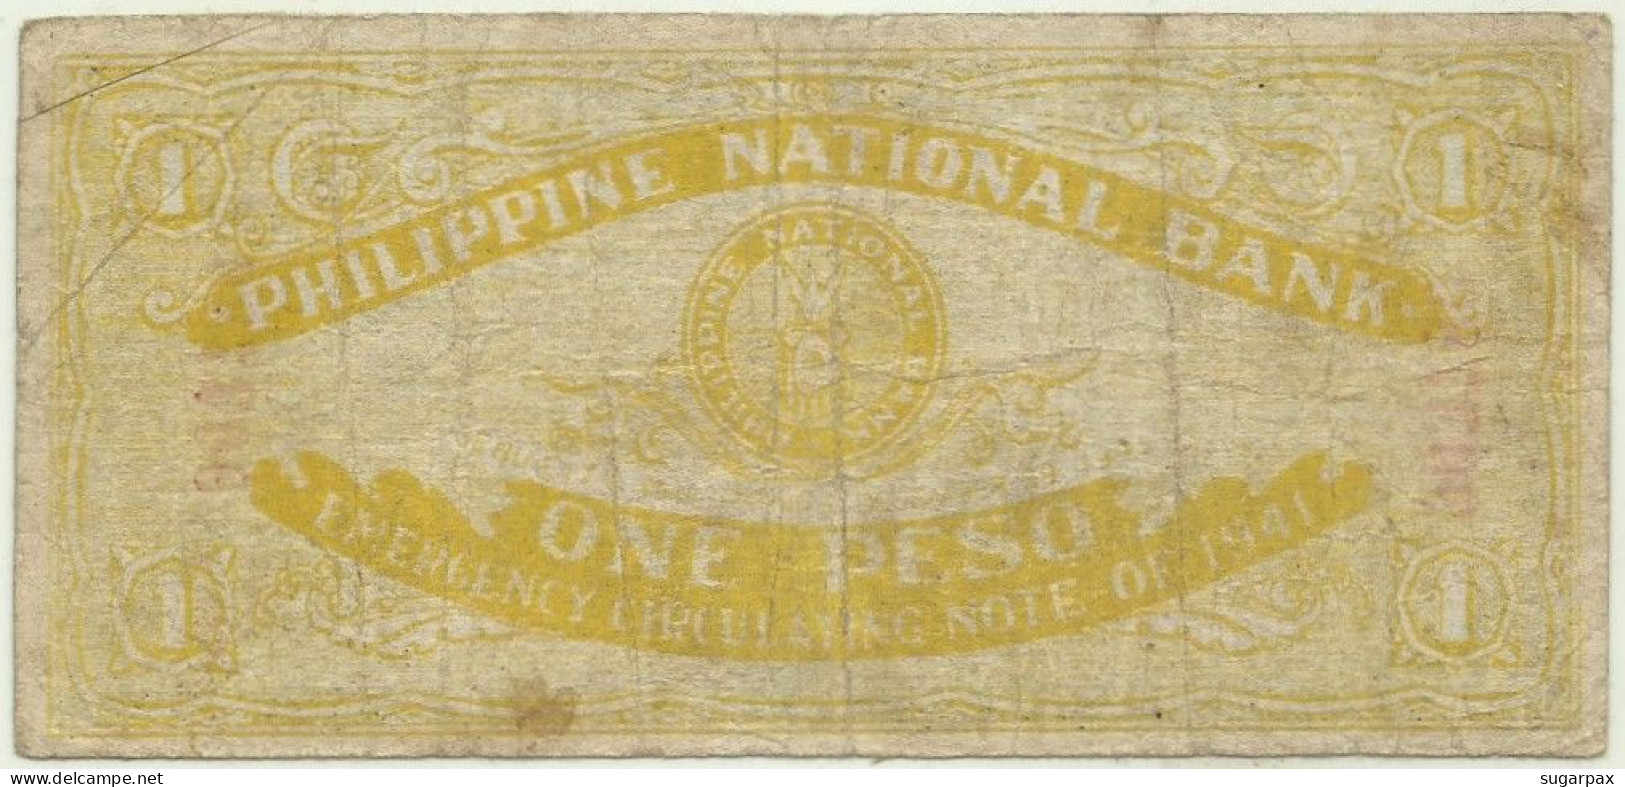 PHILIPPINES - 1 Peso - 1941 - Pick S 215 - Philippine National Bank CEBU - Filipinas